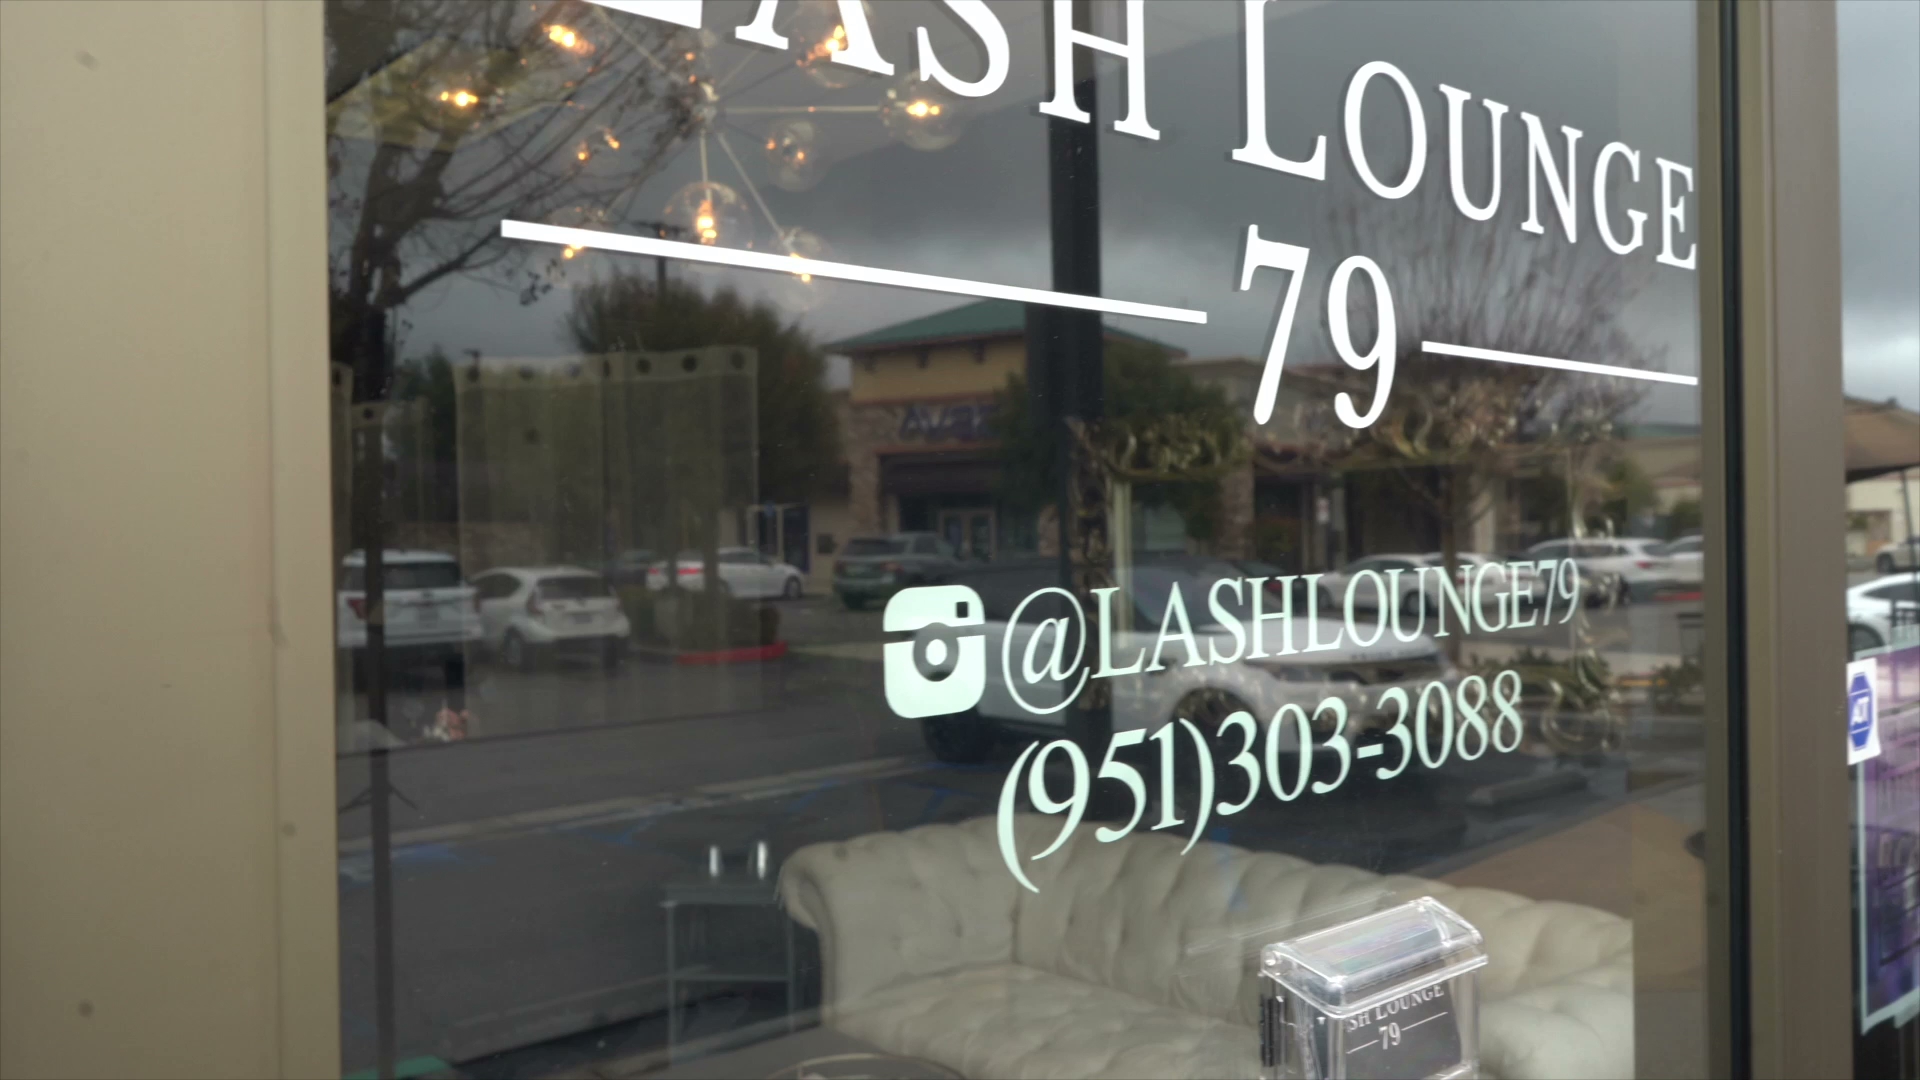 Lash Lounge 79